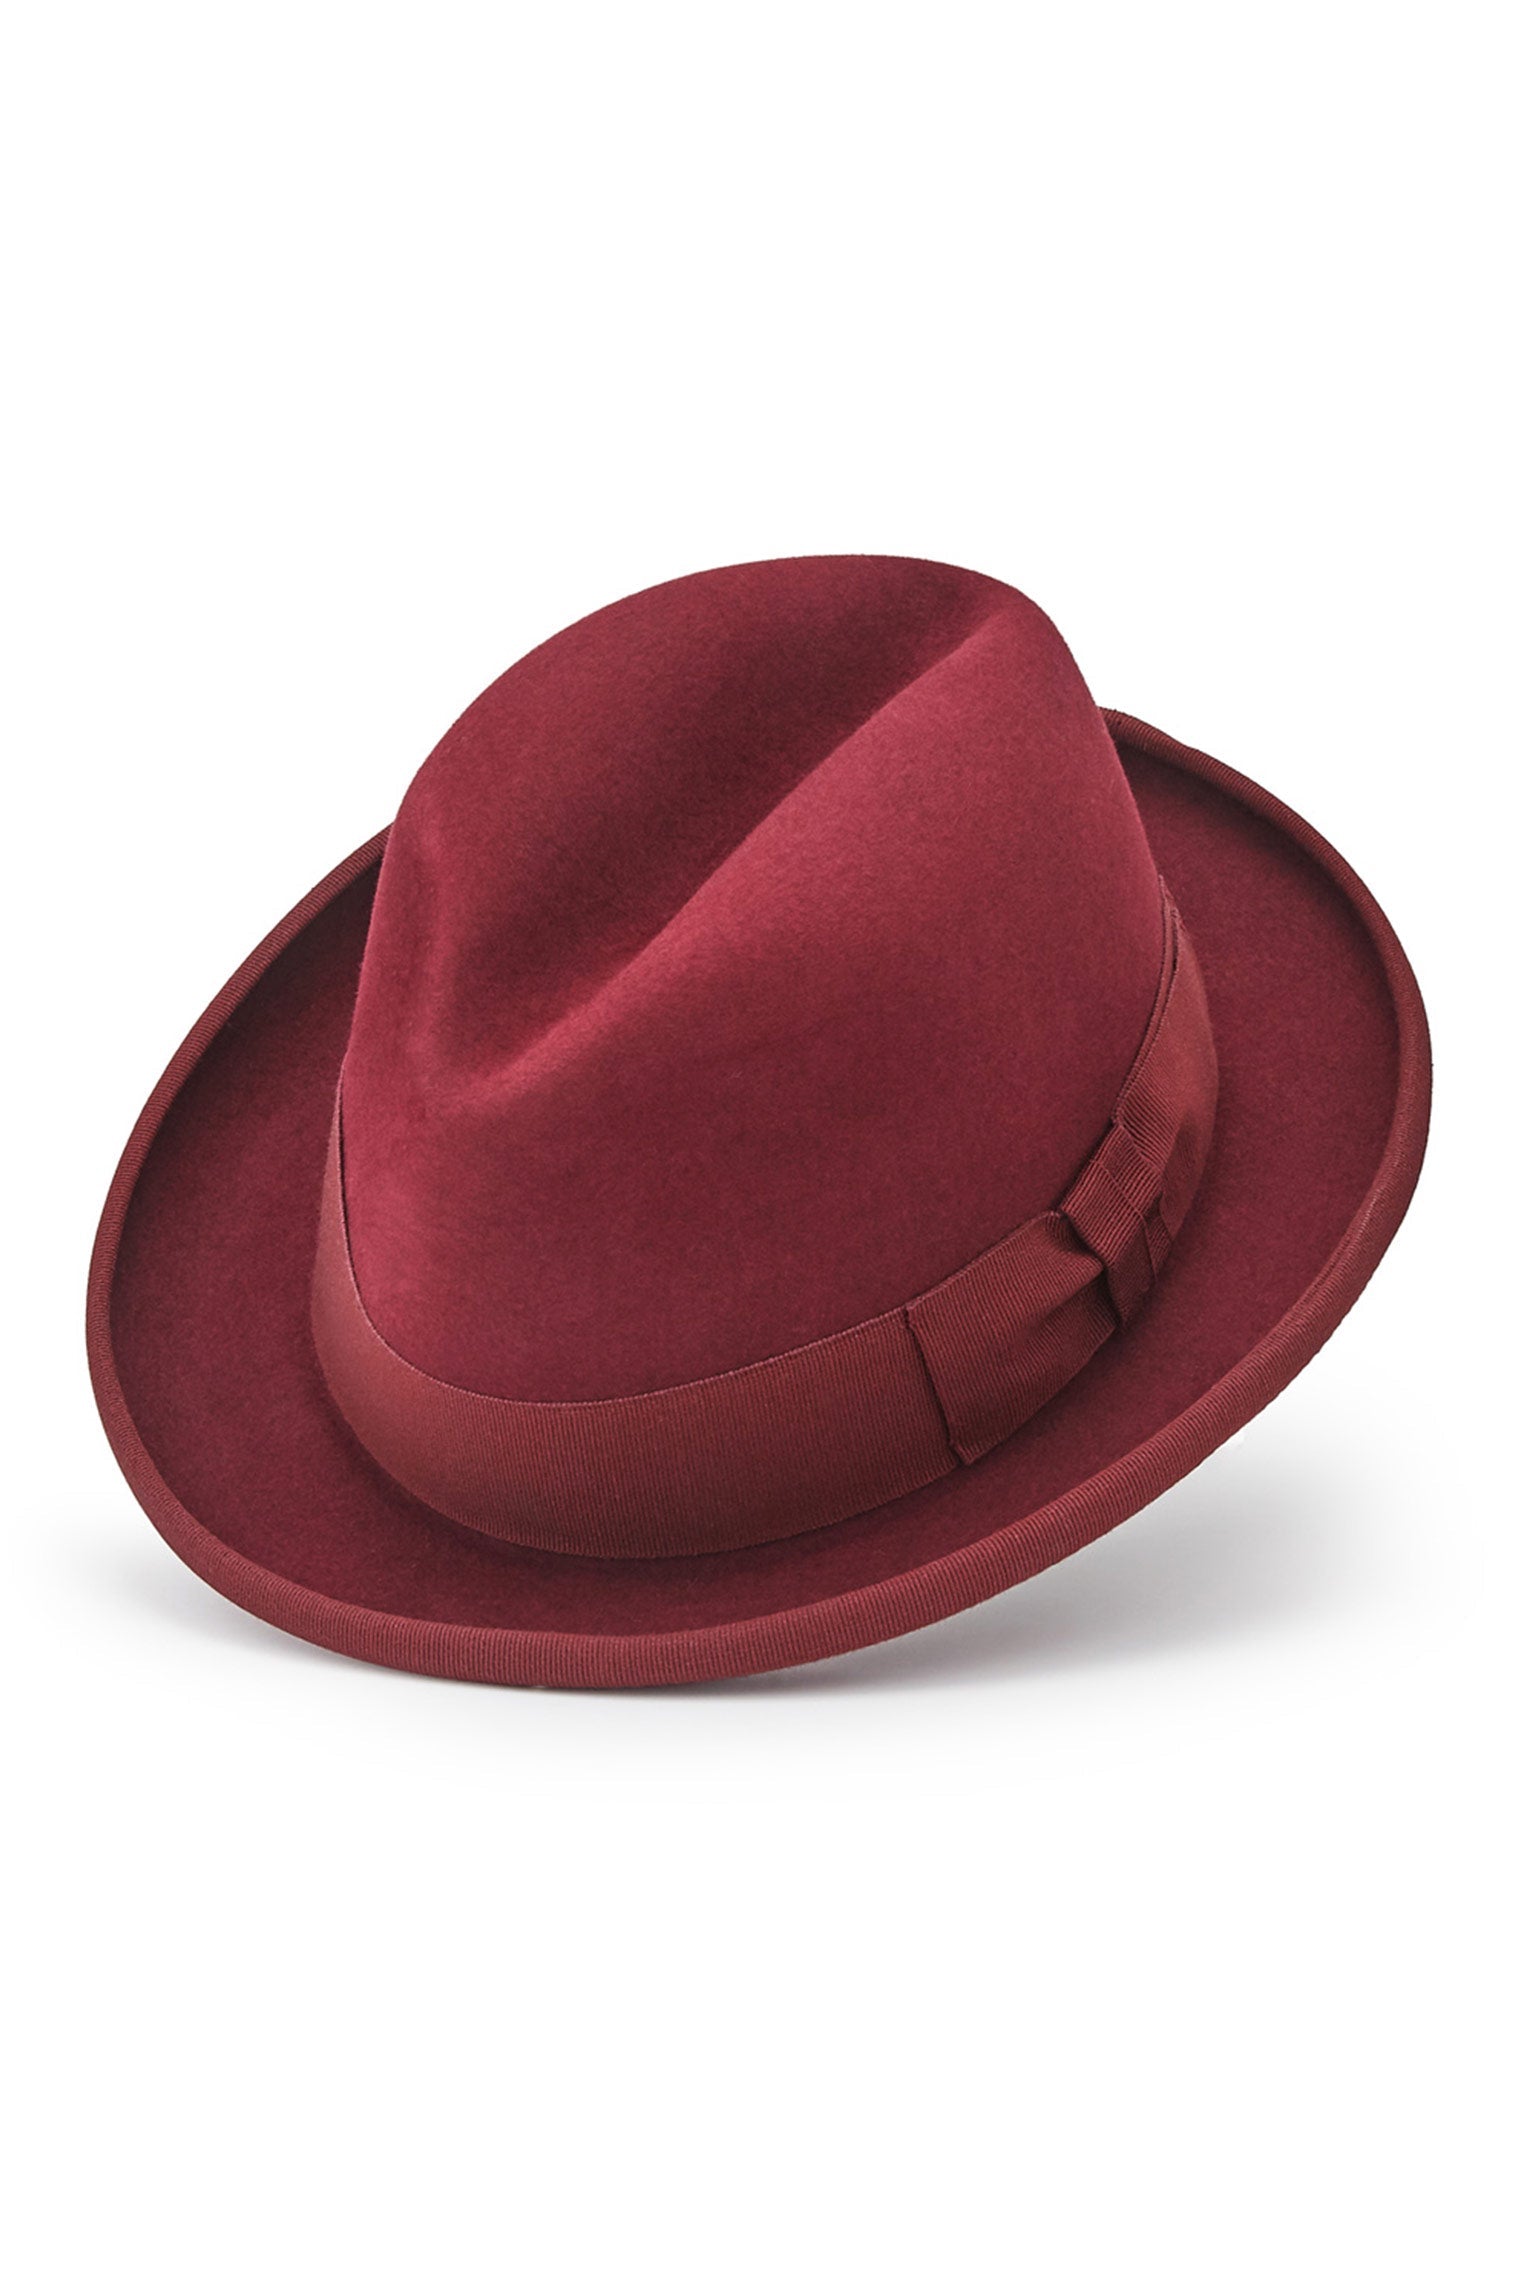 Supreme Burgundy Homburg - Men's Hats - Lock & Co. Hatters London UK